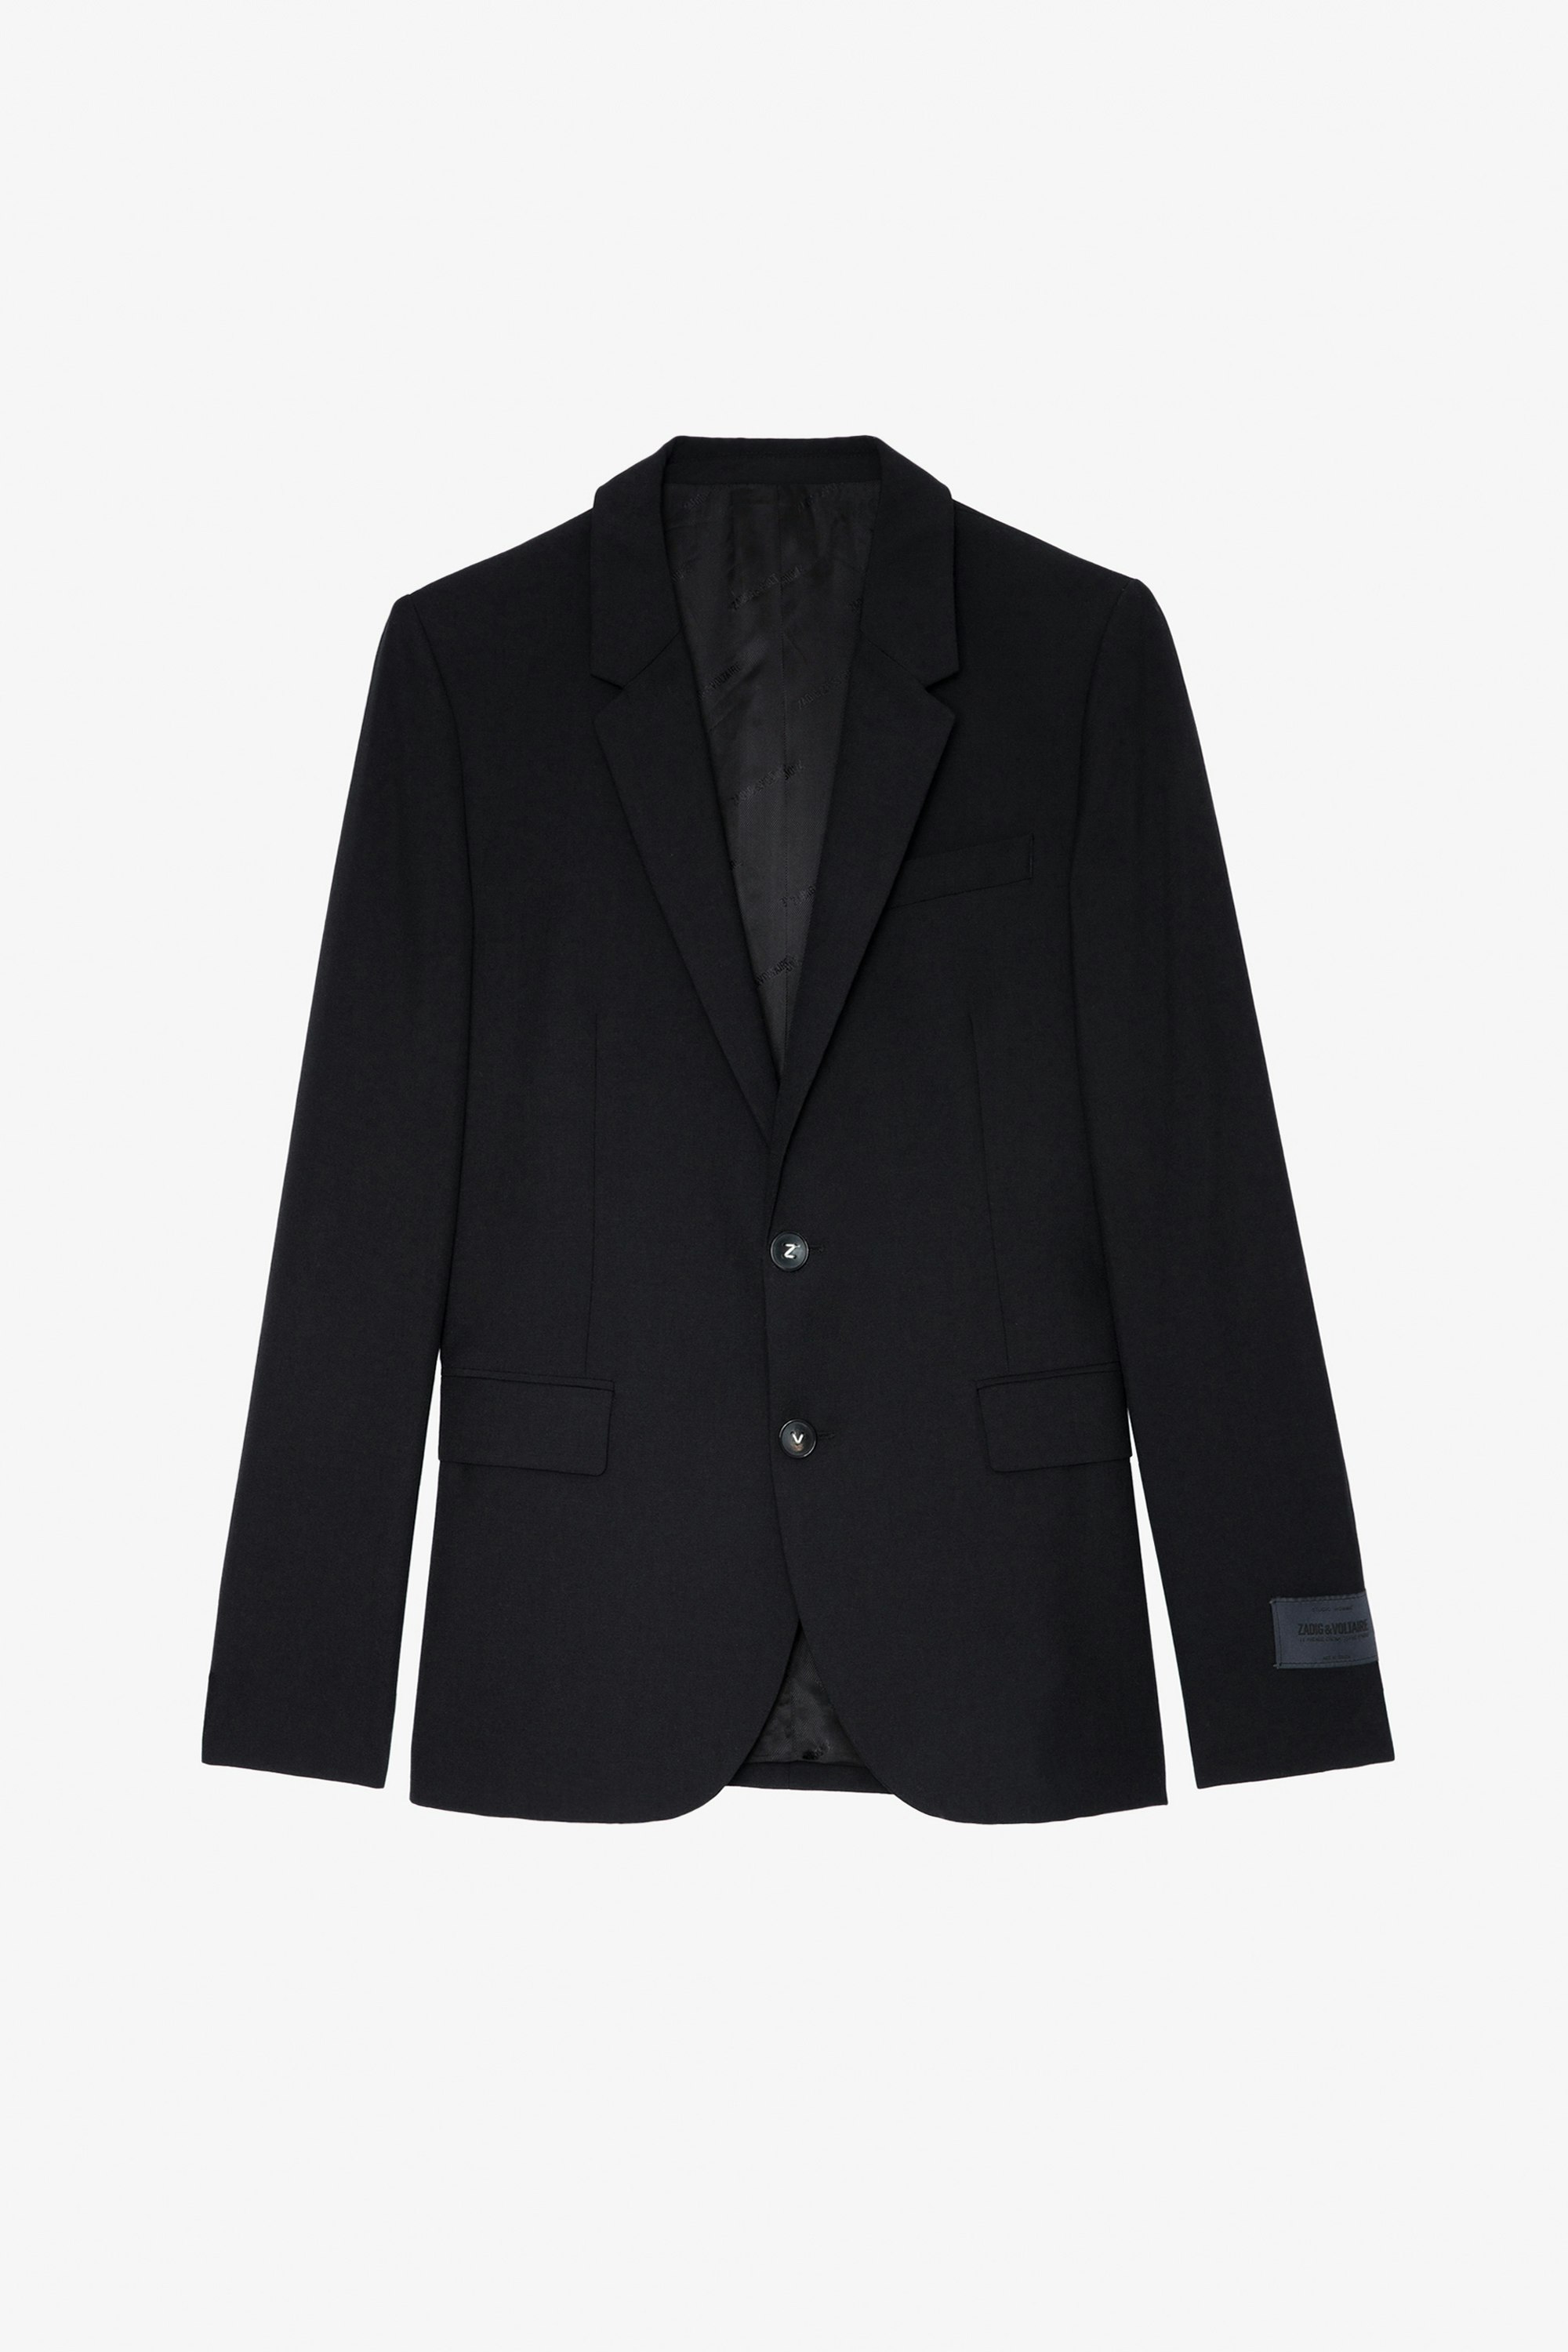 Viks Blazer - Unisex's black wool blazer with studio insignia on left sleeve.